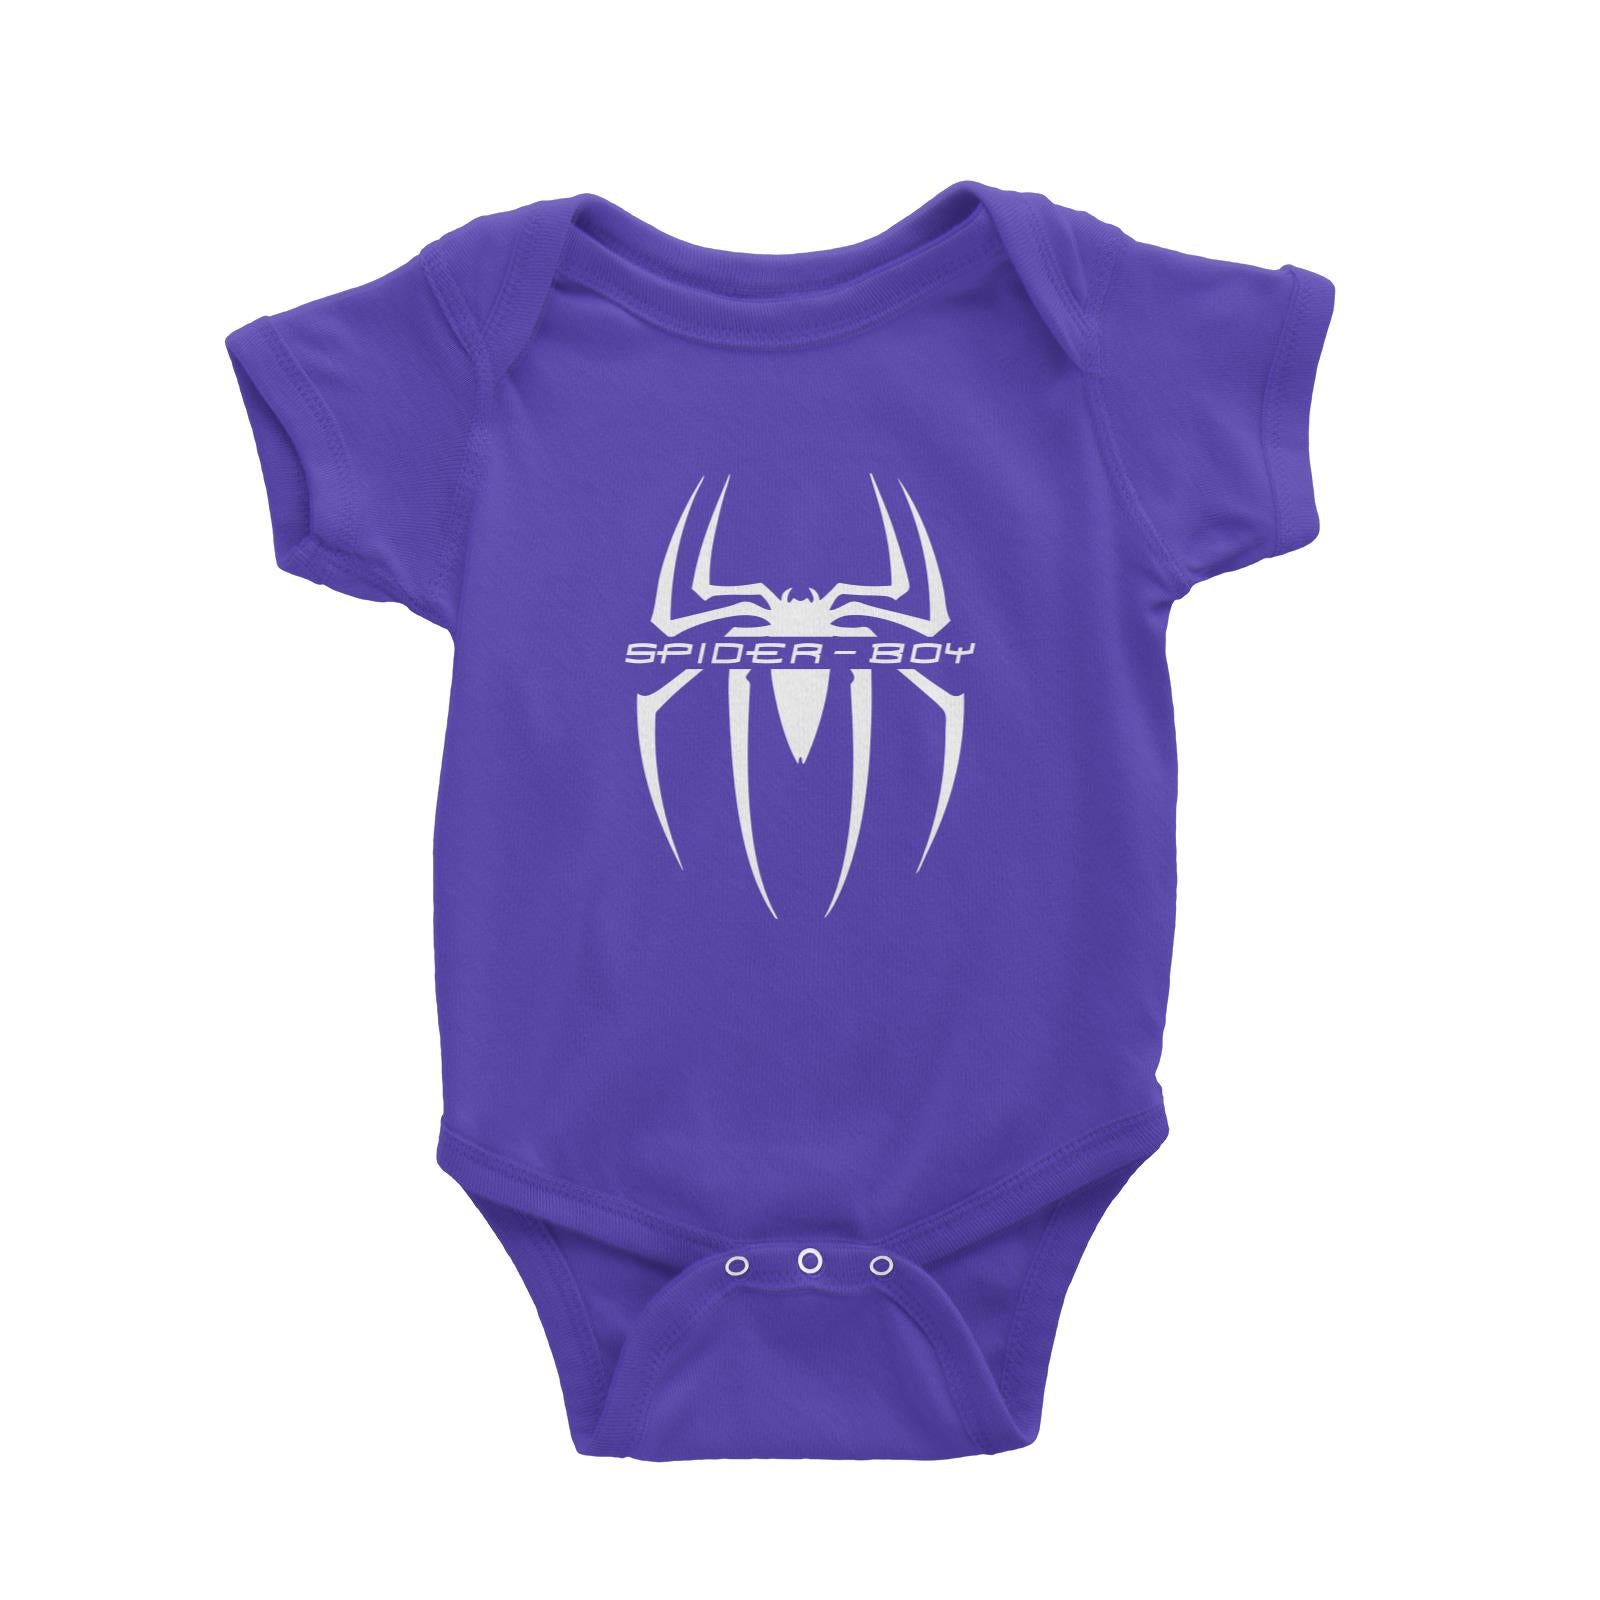 Superhero Spider Boy Baby Romper  Matching Family